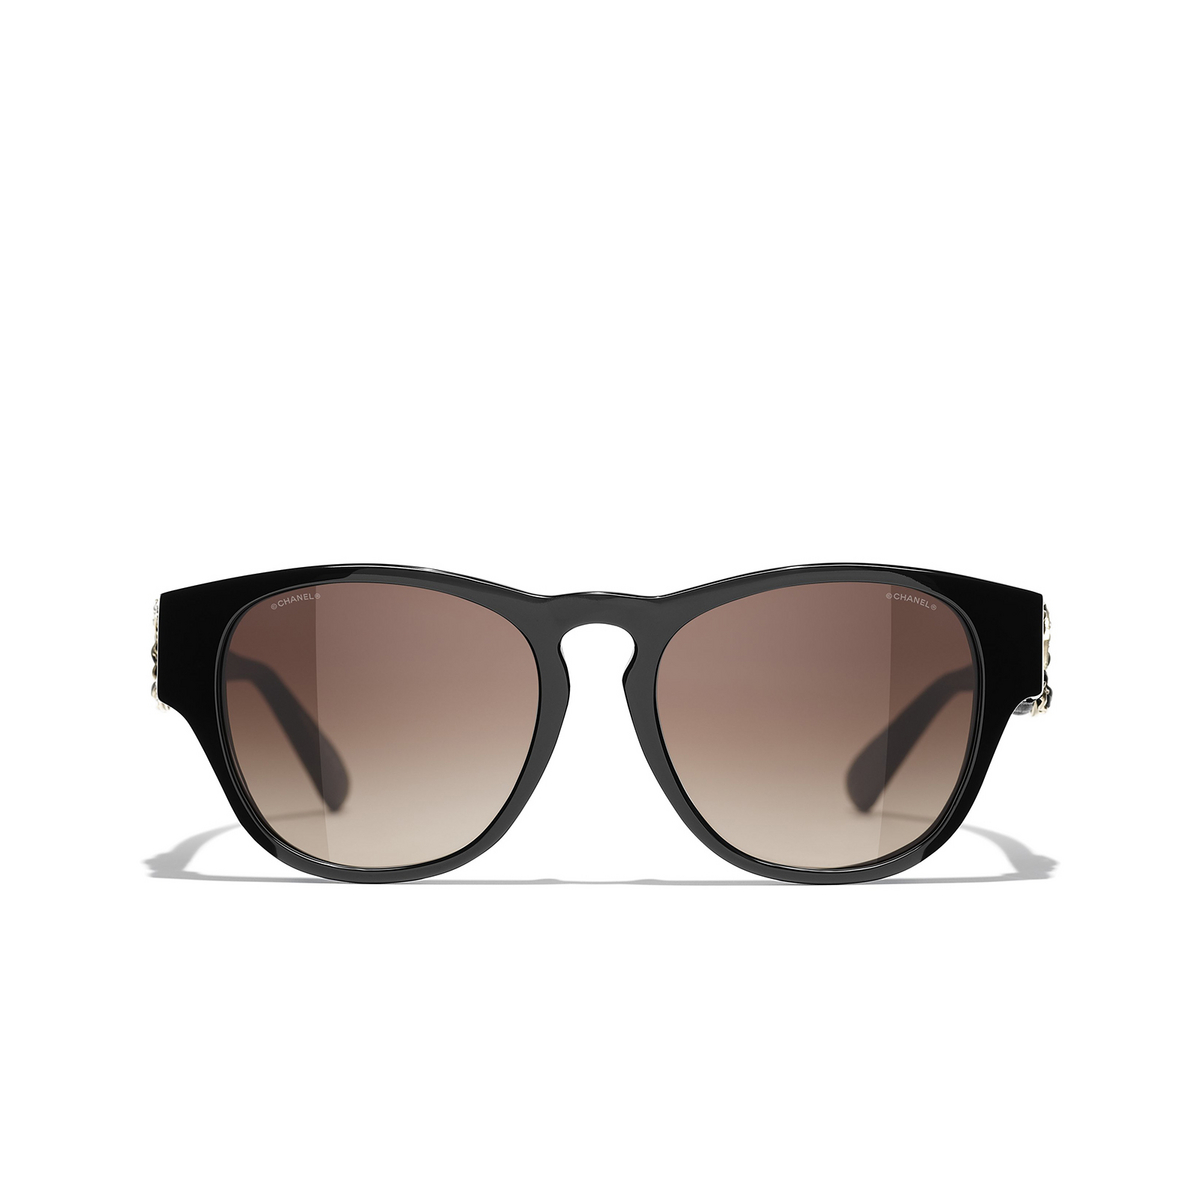 CHANEL rectangle Sunglasses C622S5 Black - front view